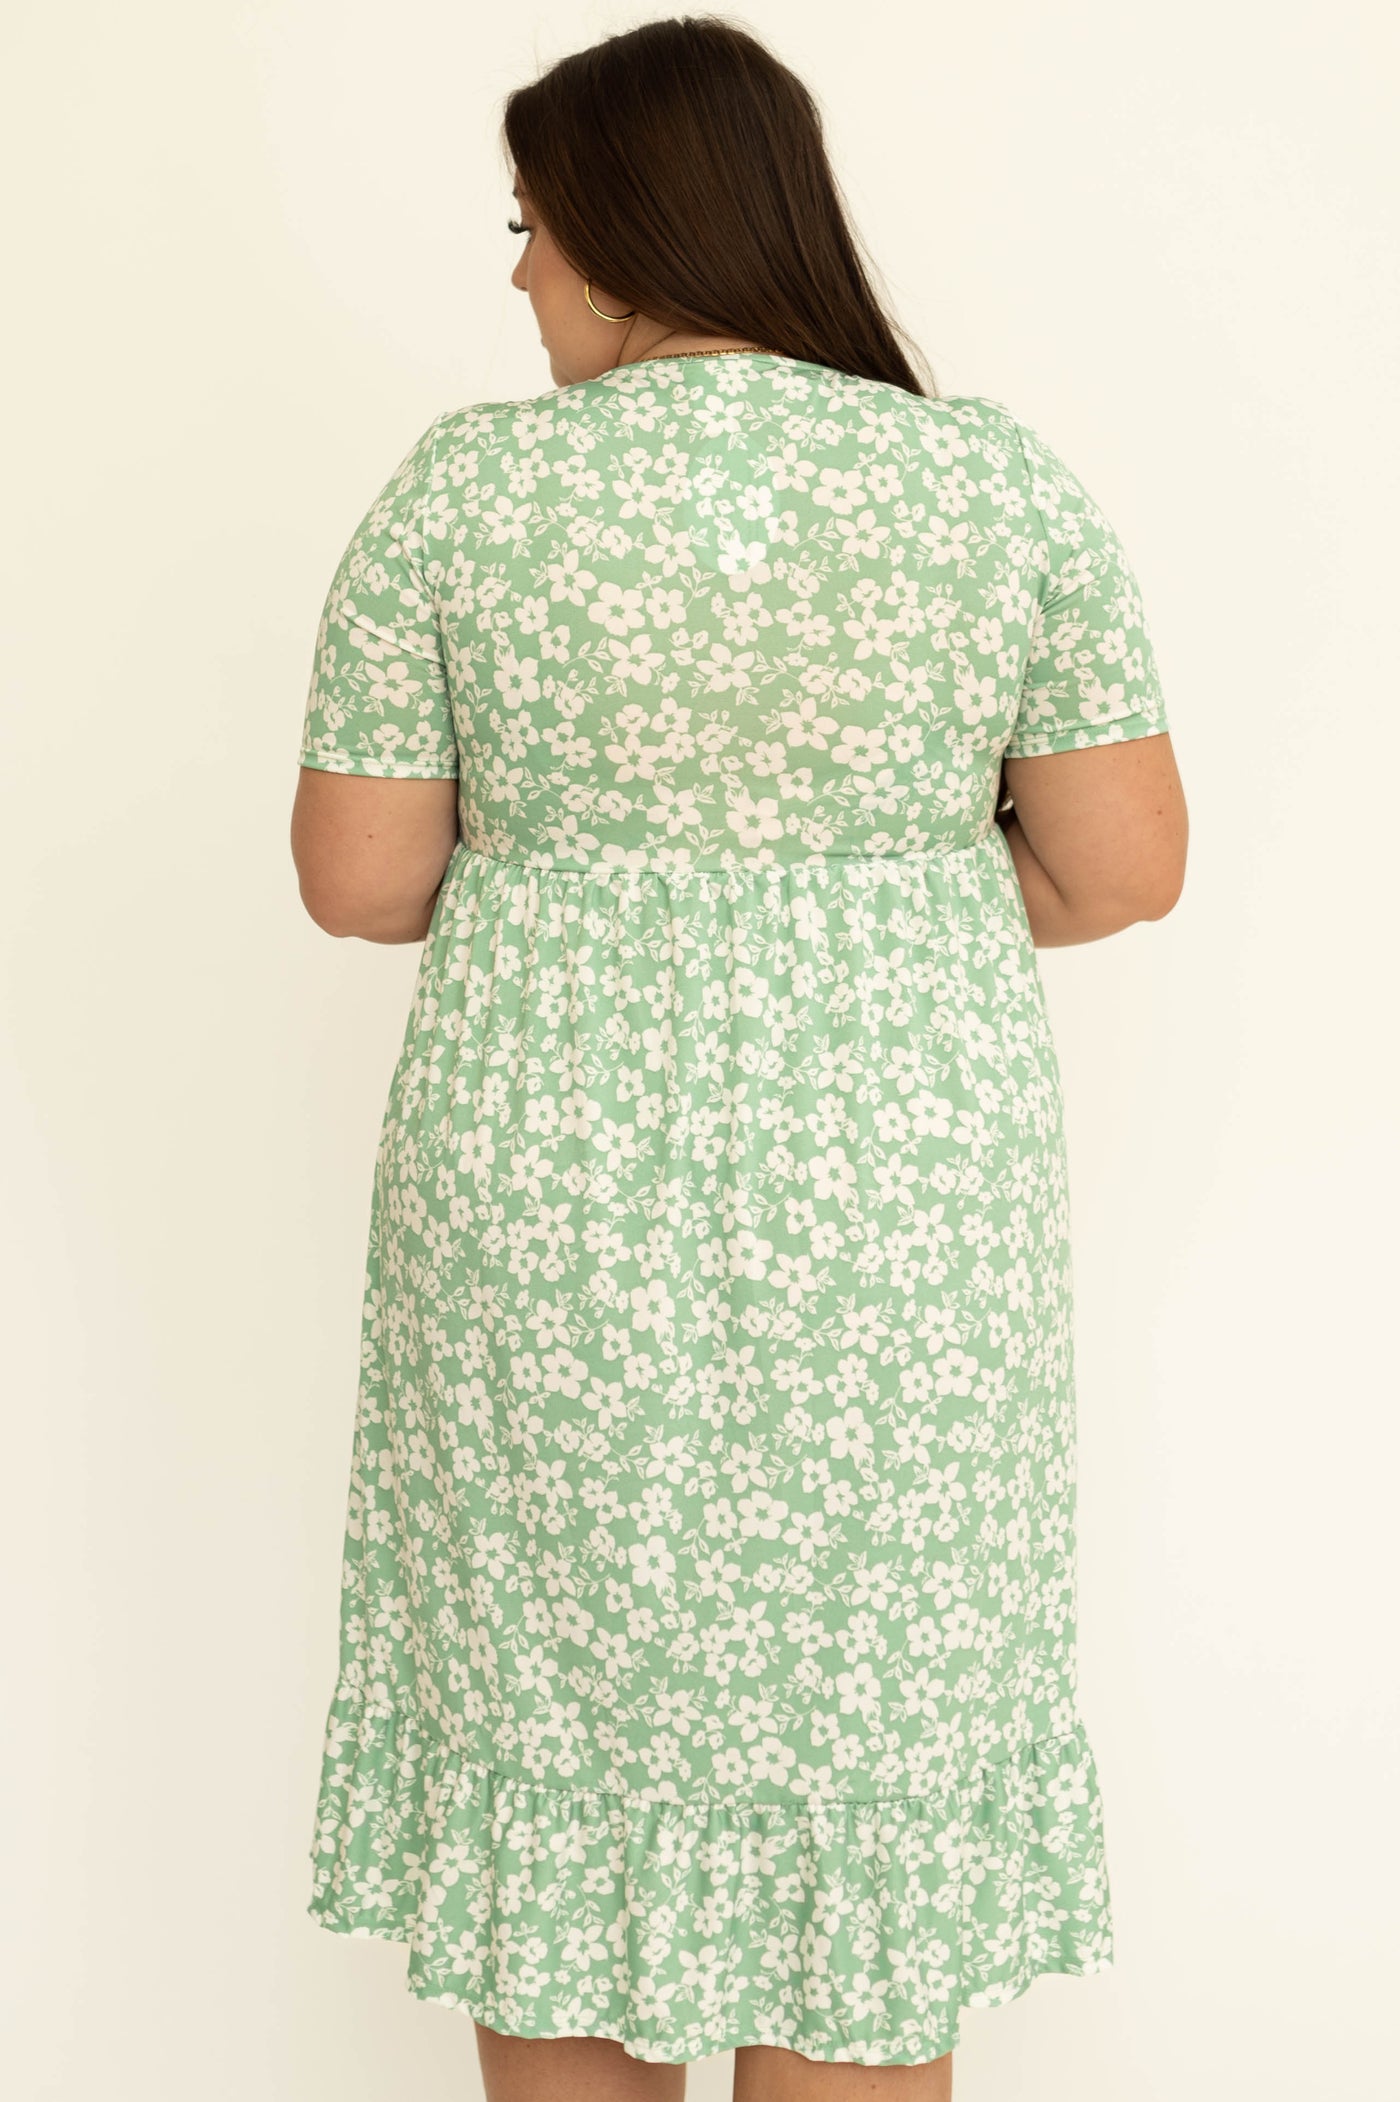 Back view of a plus size mint floral dress